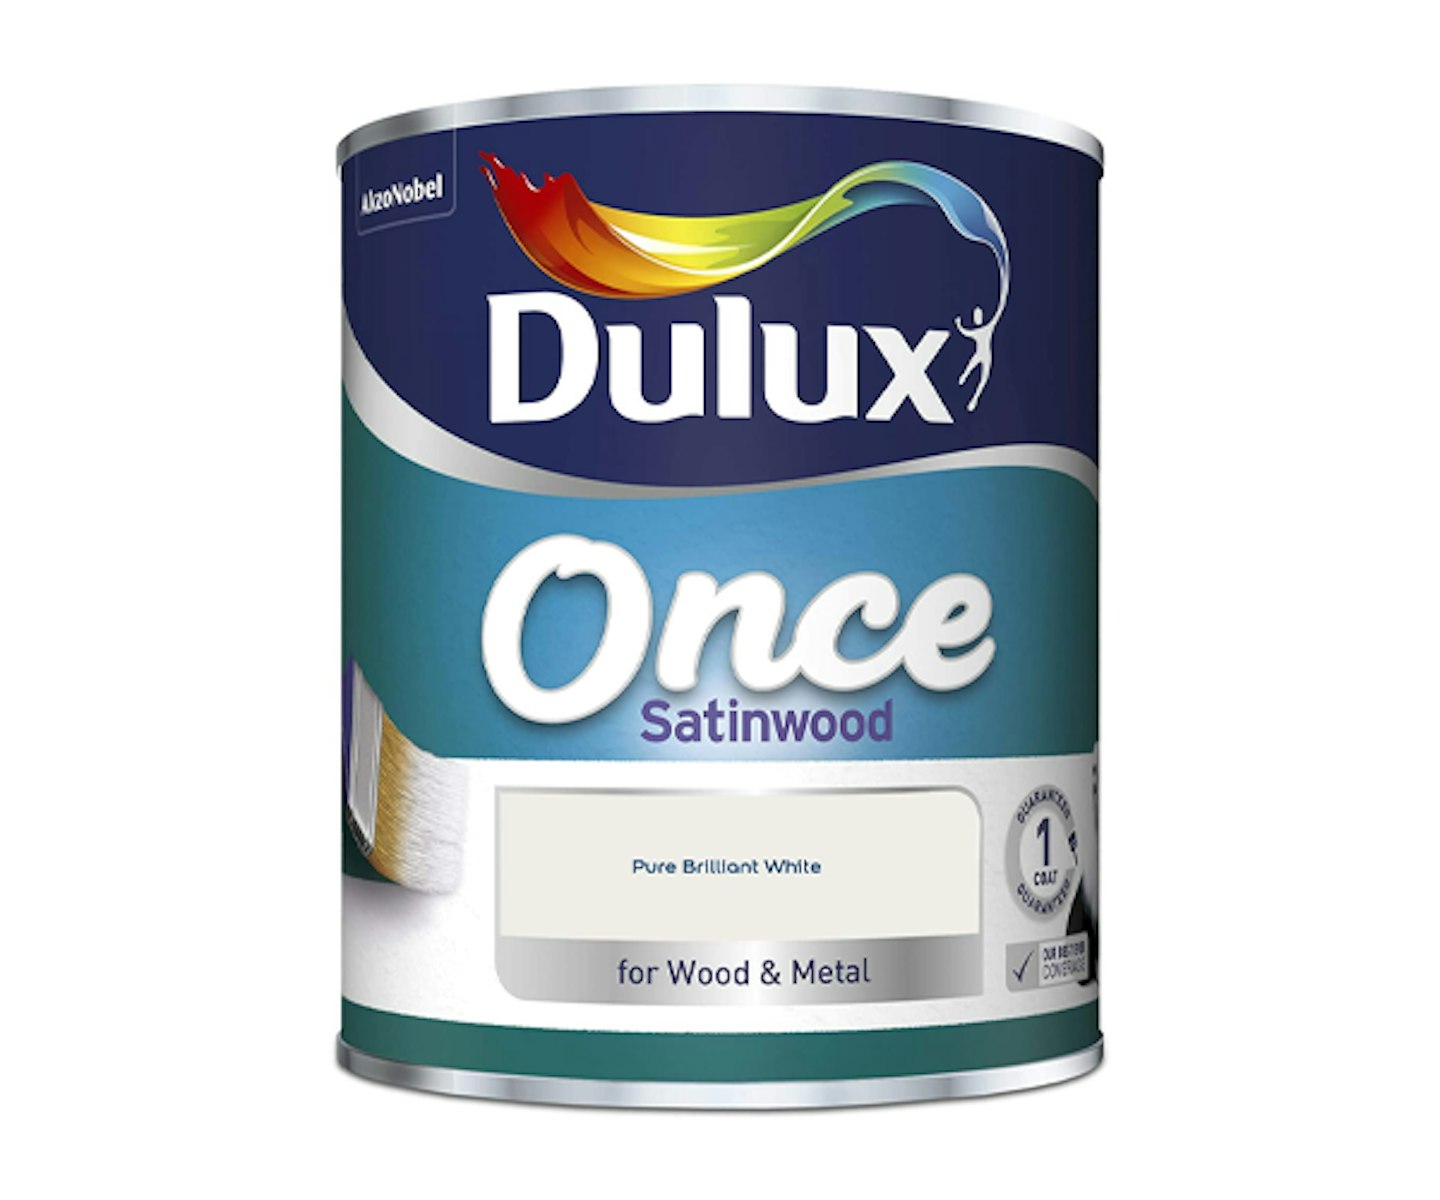 Dulux Once Satinwood Paint